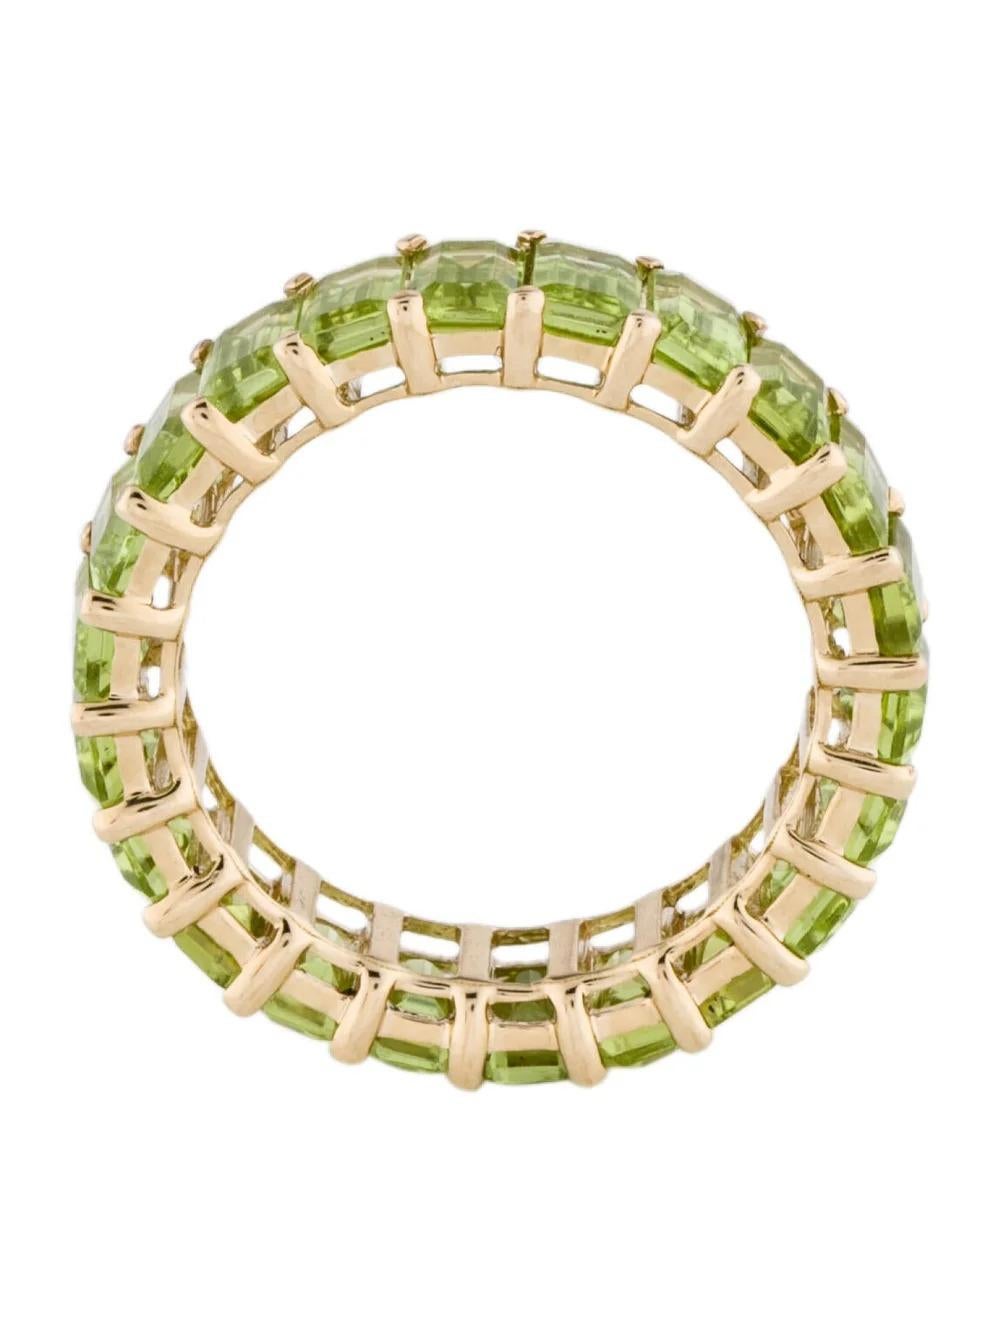 Women's Designer 14K Peridot Eternity Band Ring - 7.17ctw, Size 7, Green Gemstone Design